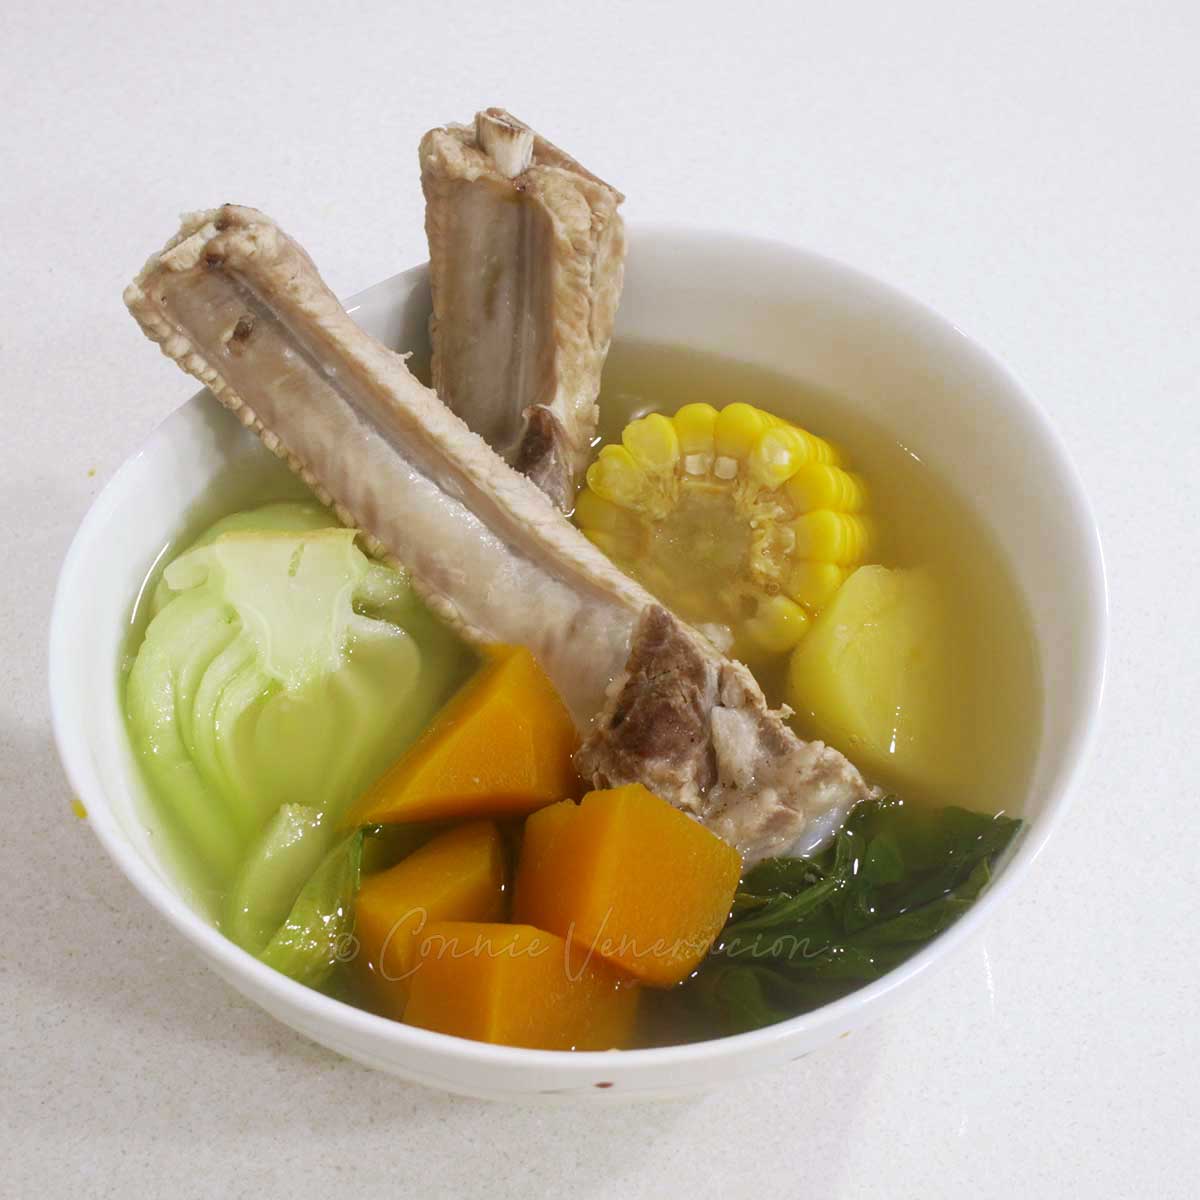 Pork ribs and vegetable soup (nilagang baboy)